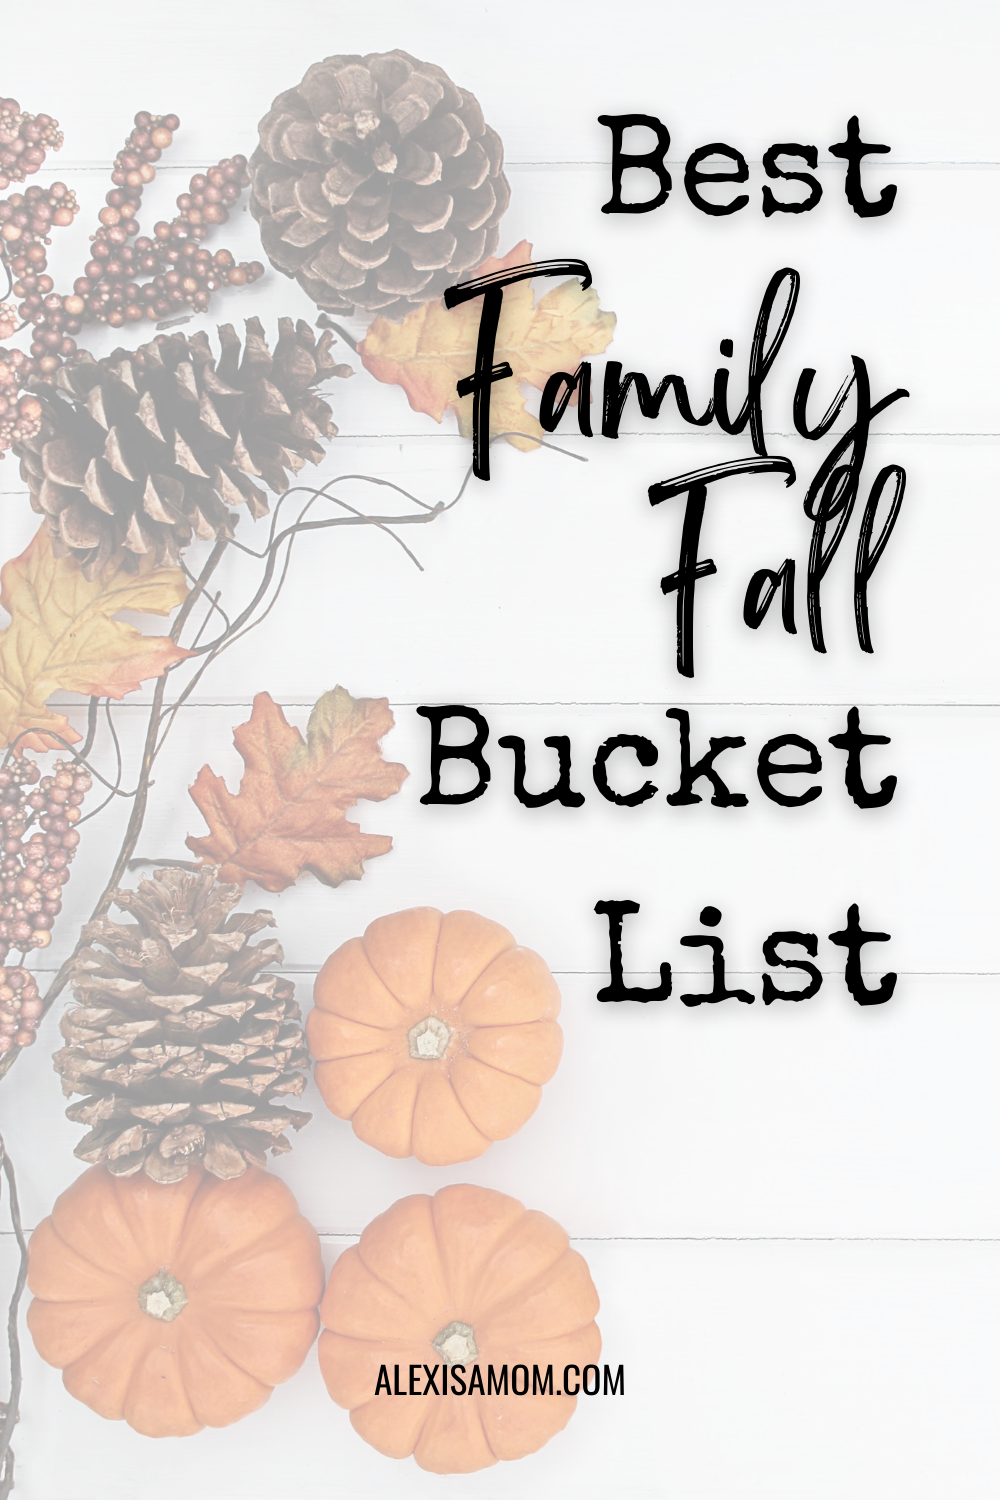 Best Family Fall Bucket List - ALEX IS A MOM dot COM